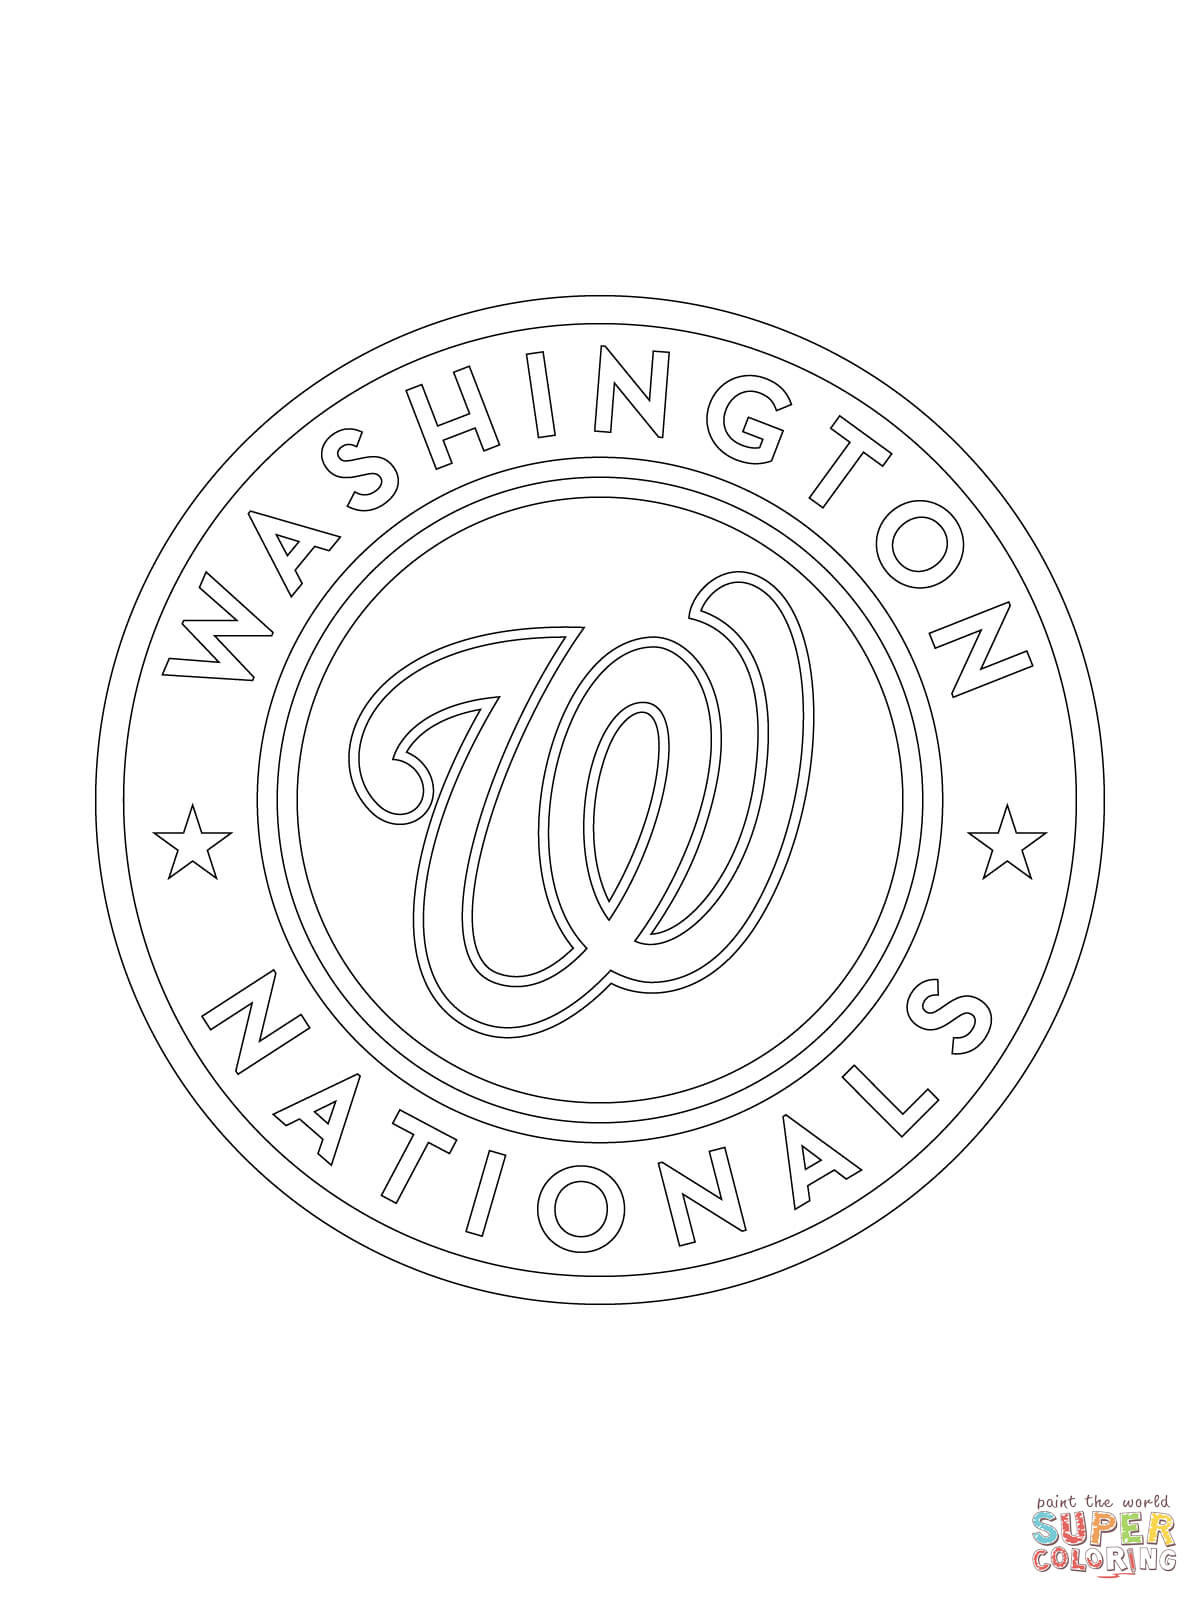 Washington Nationals Logo coloring page | Free Printable Coloring Pages